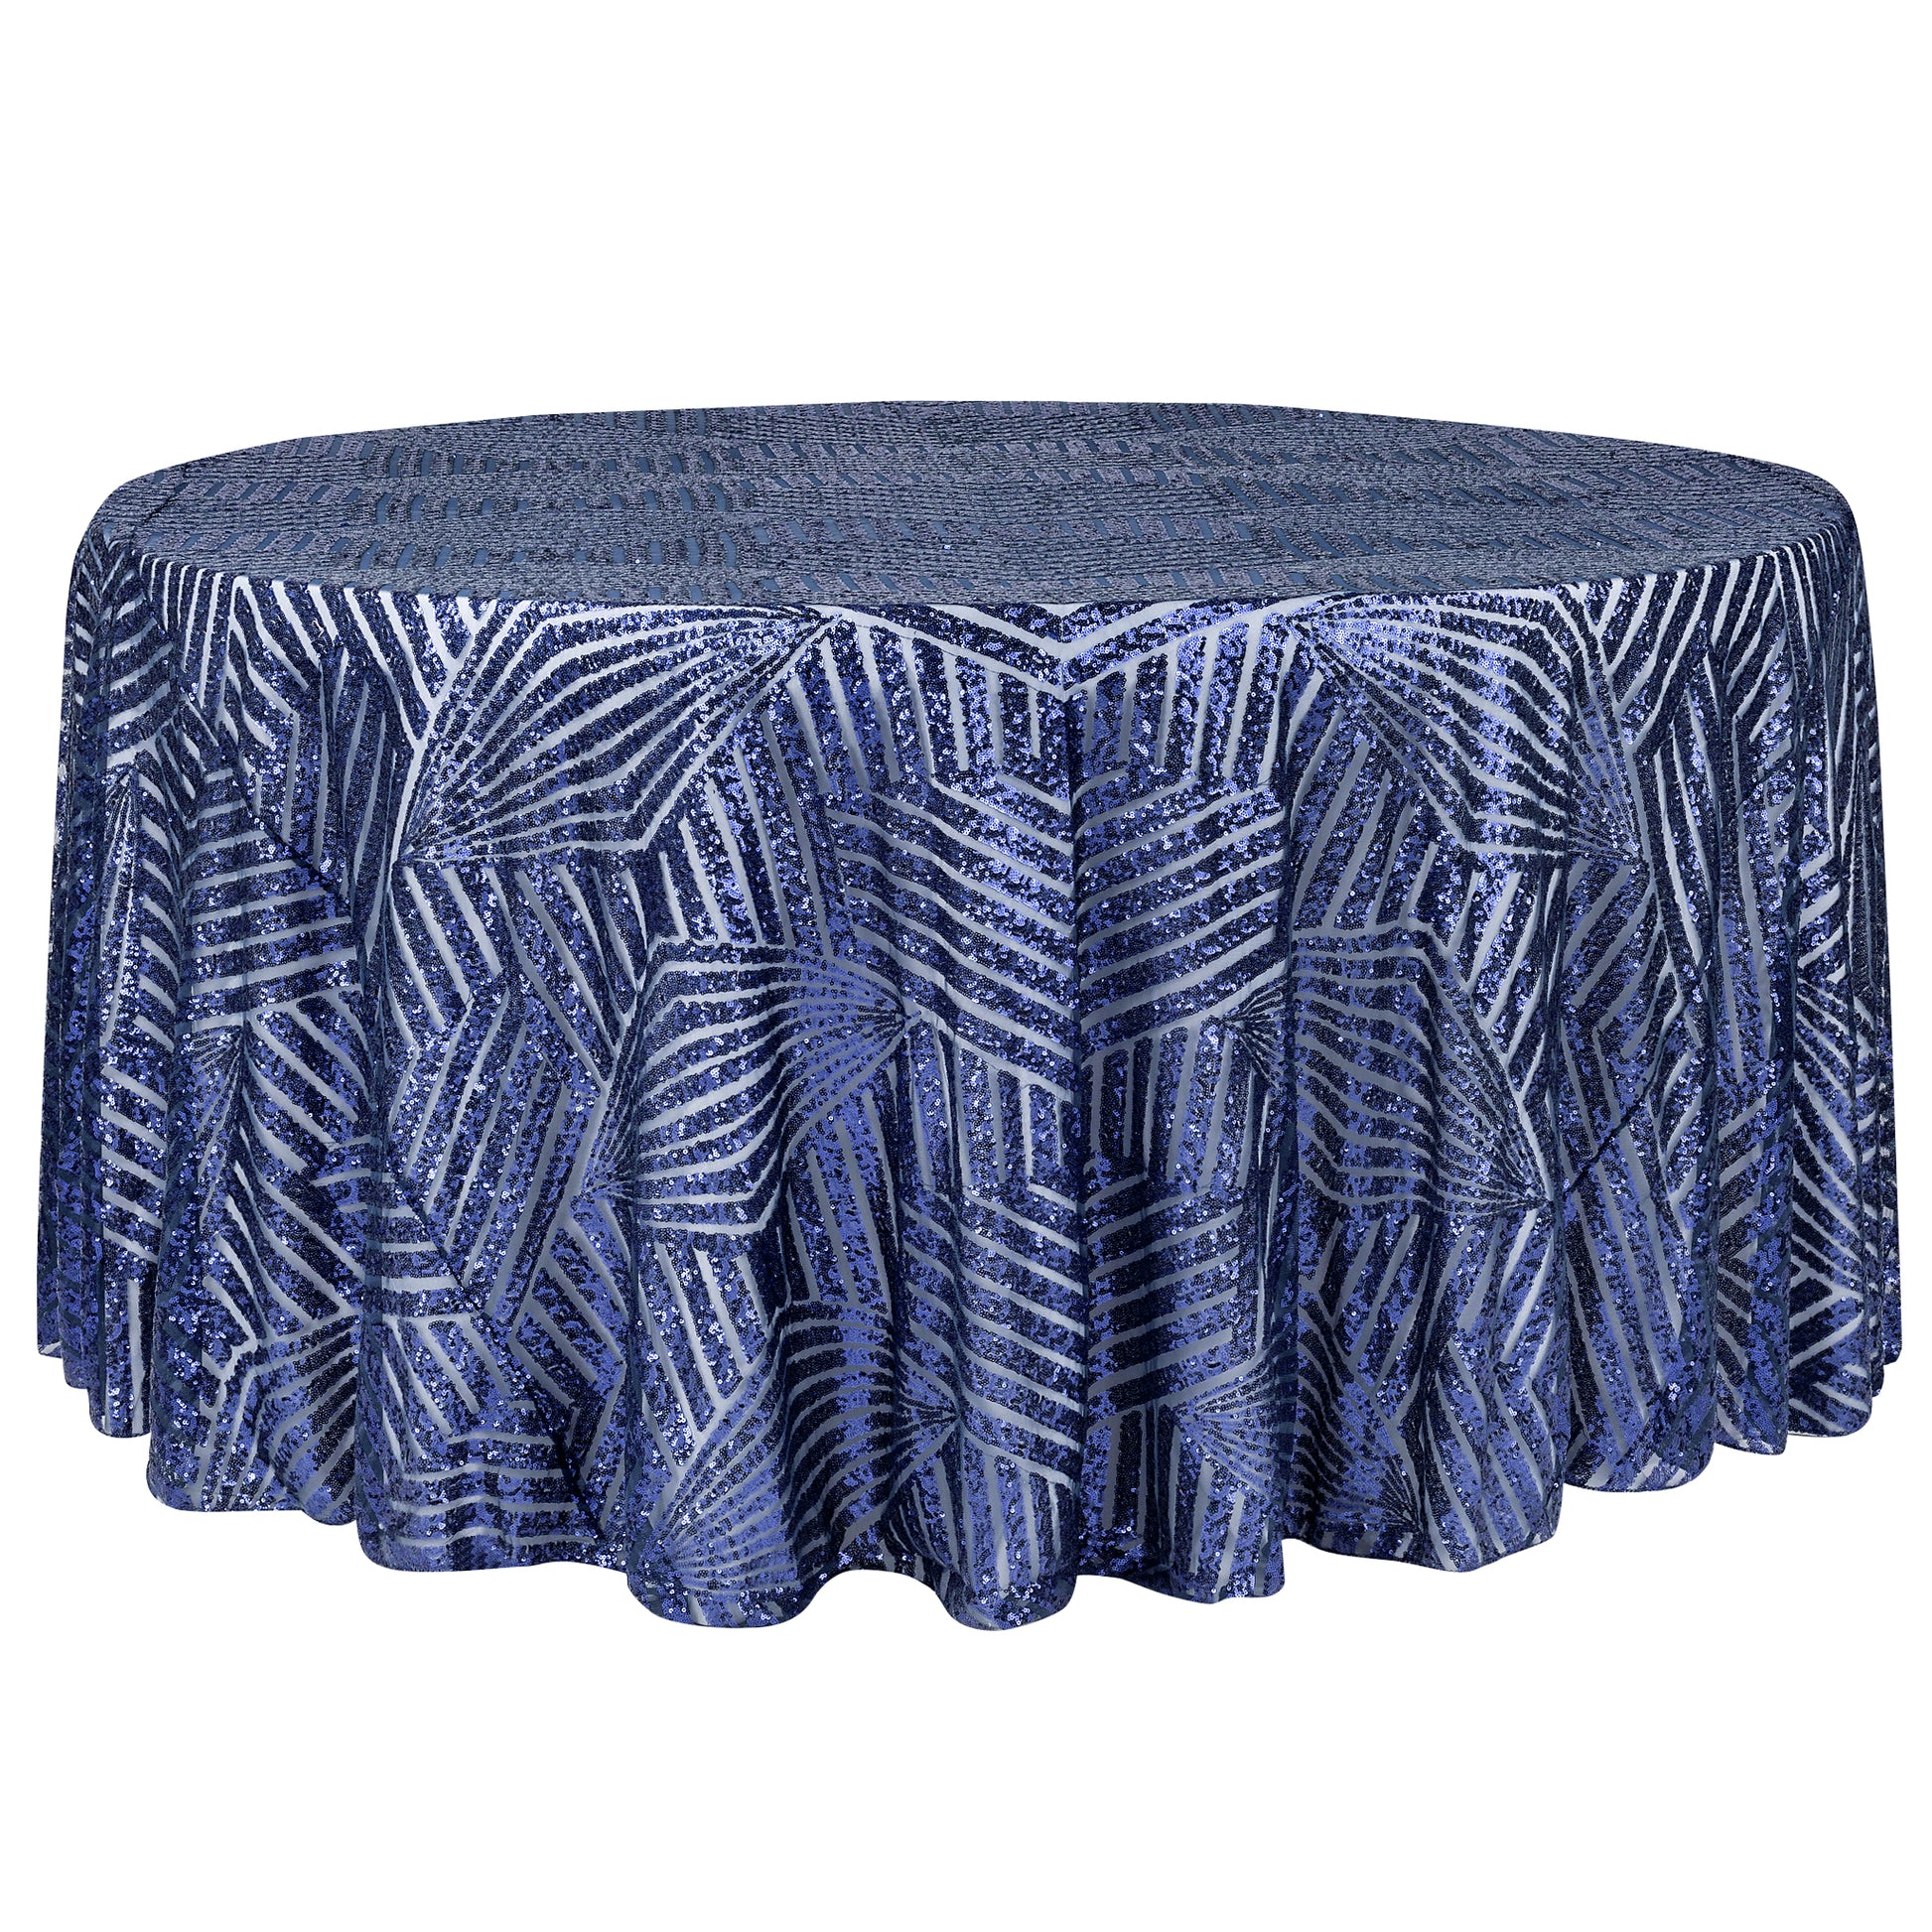 Geometric Glitz Art Deco Sequin Tablecloth 120" Round - Navy Blue - CV Linens